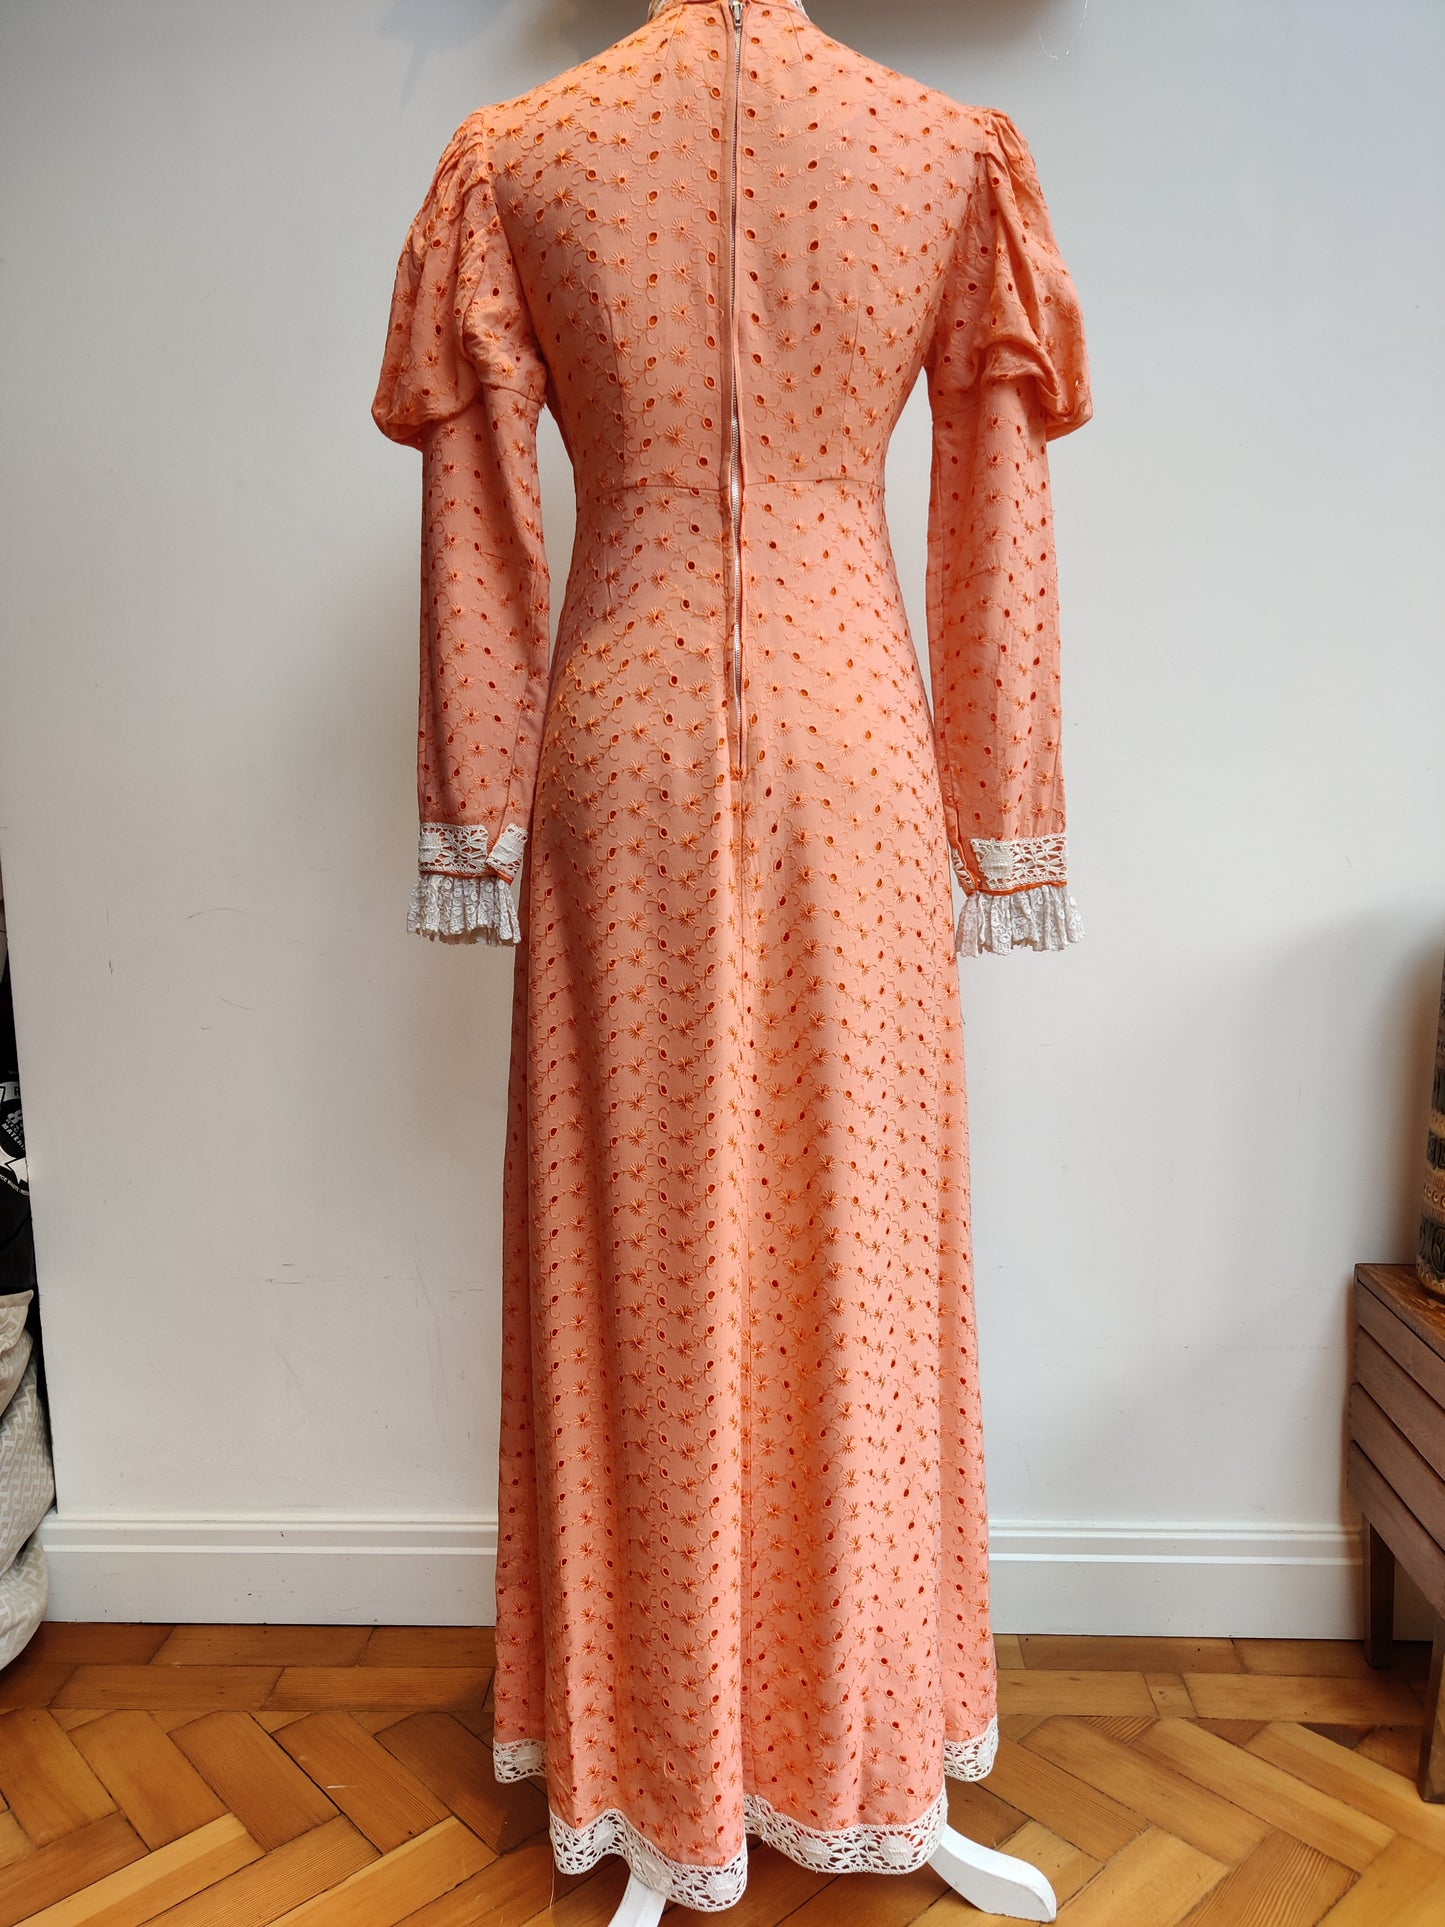 Stunning 70s prairie maxi dress